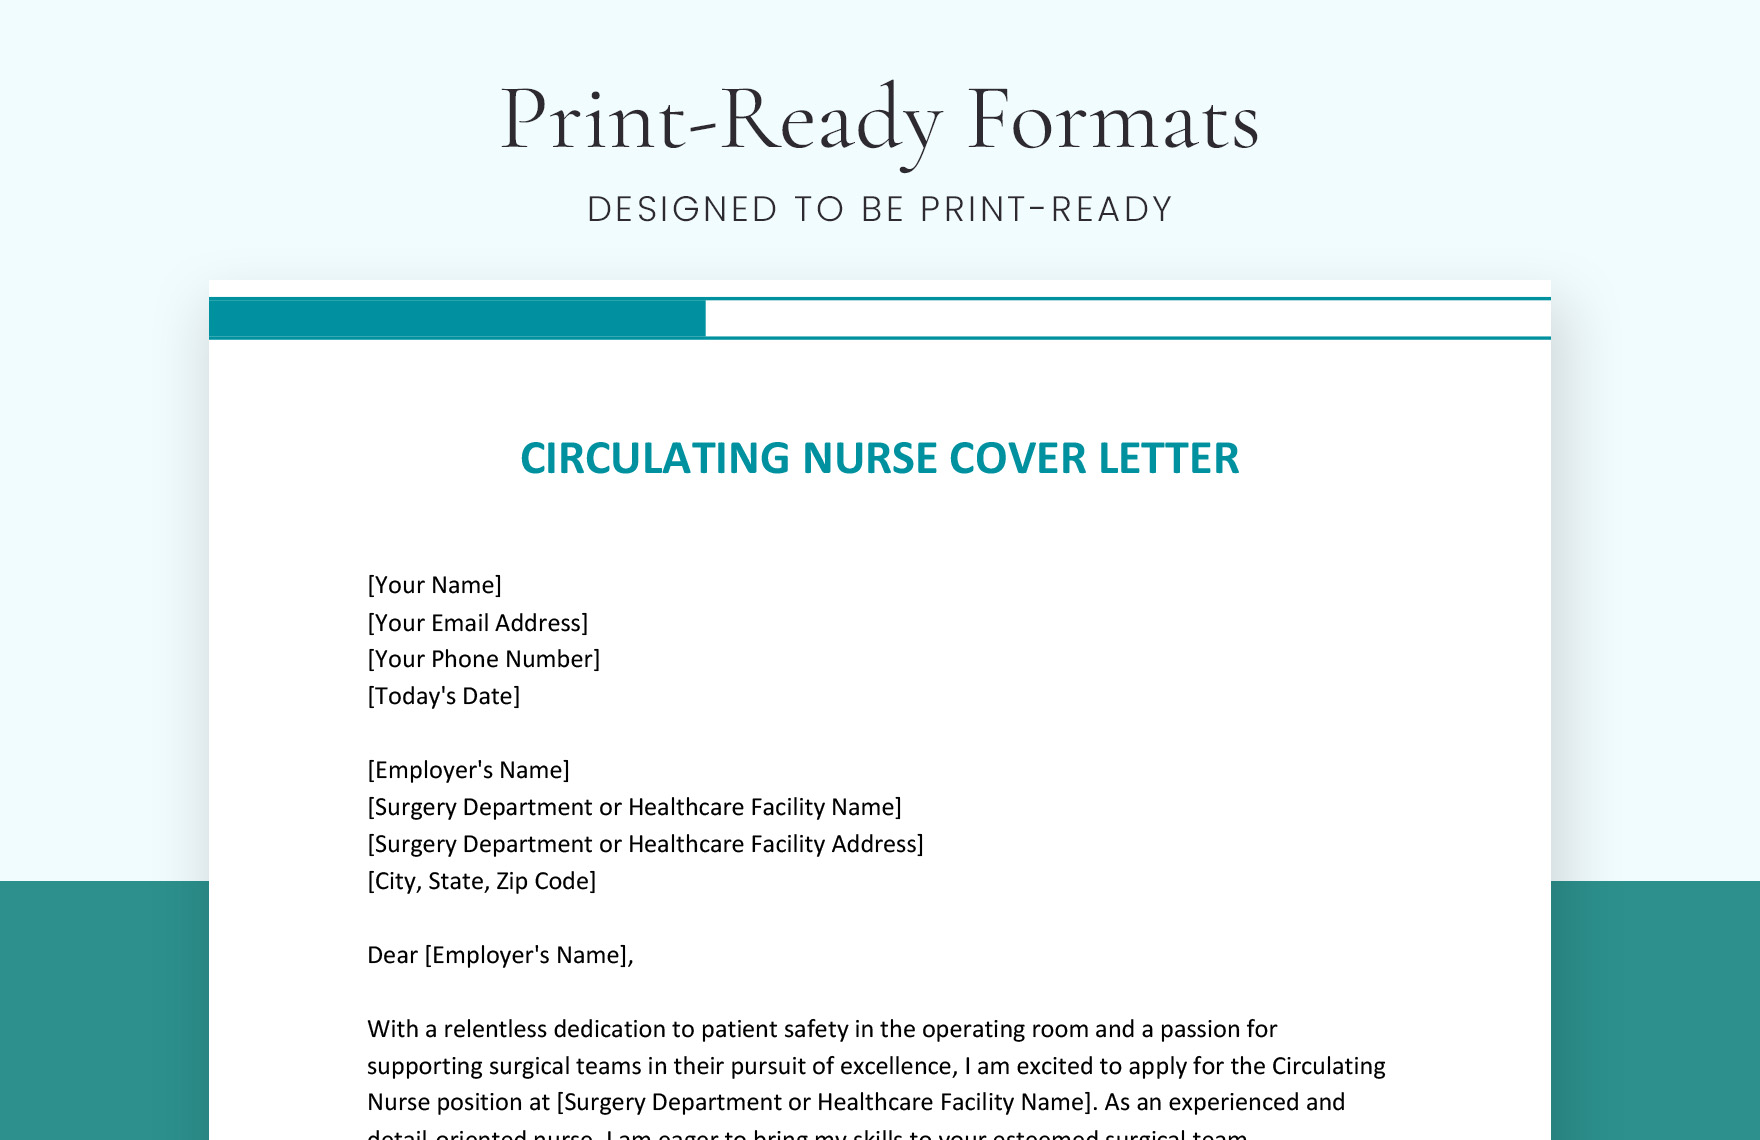 Circulating Nurse Cover Letter